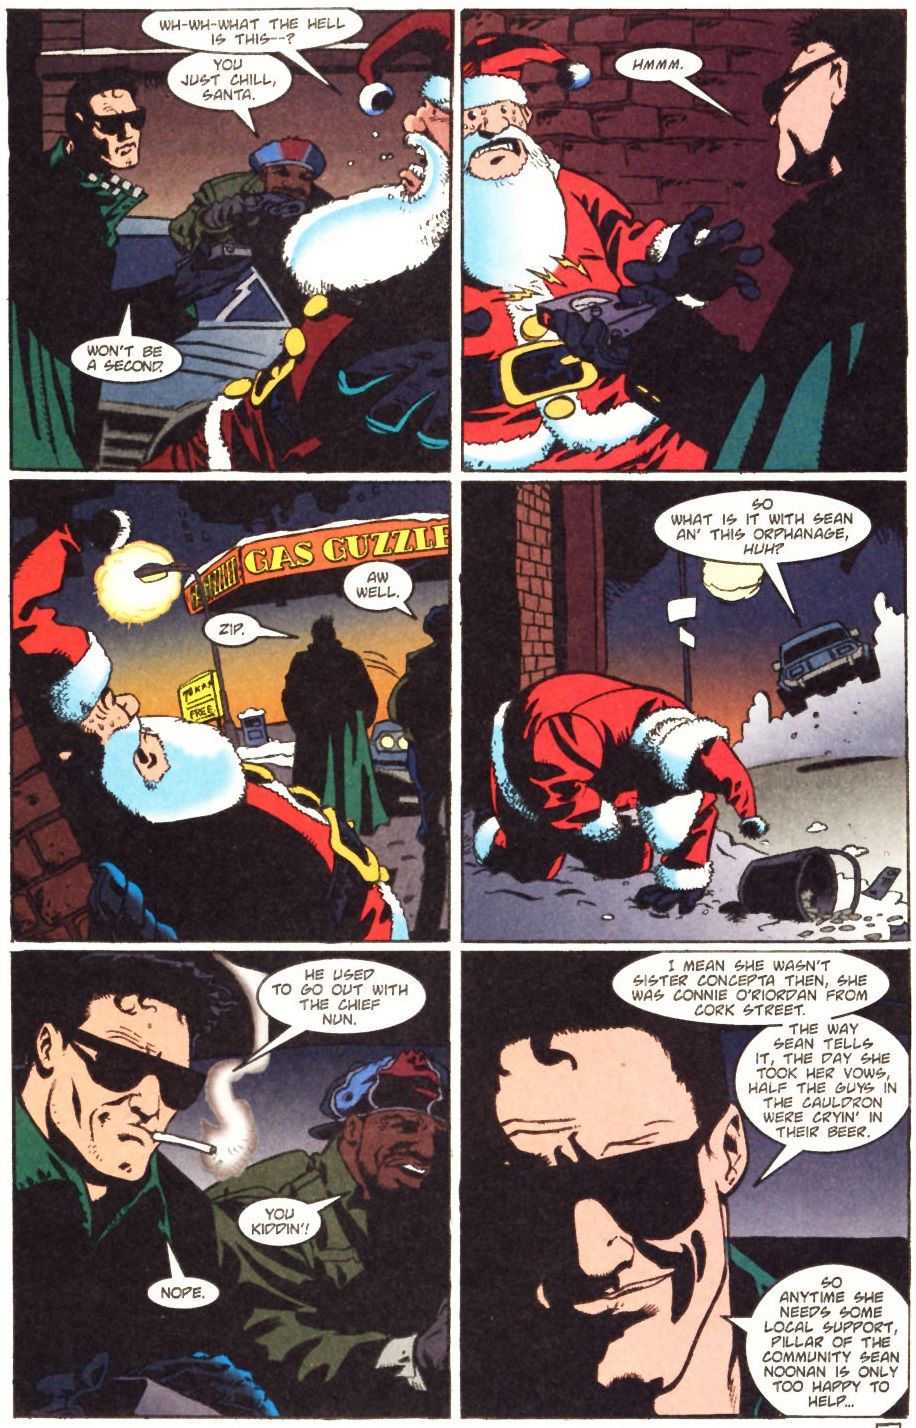 Hitman almost attacks a regular Santa Claus